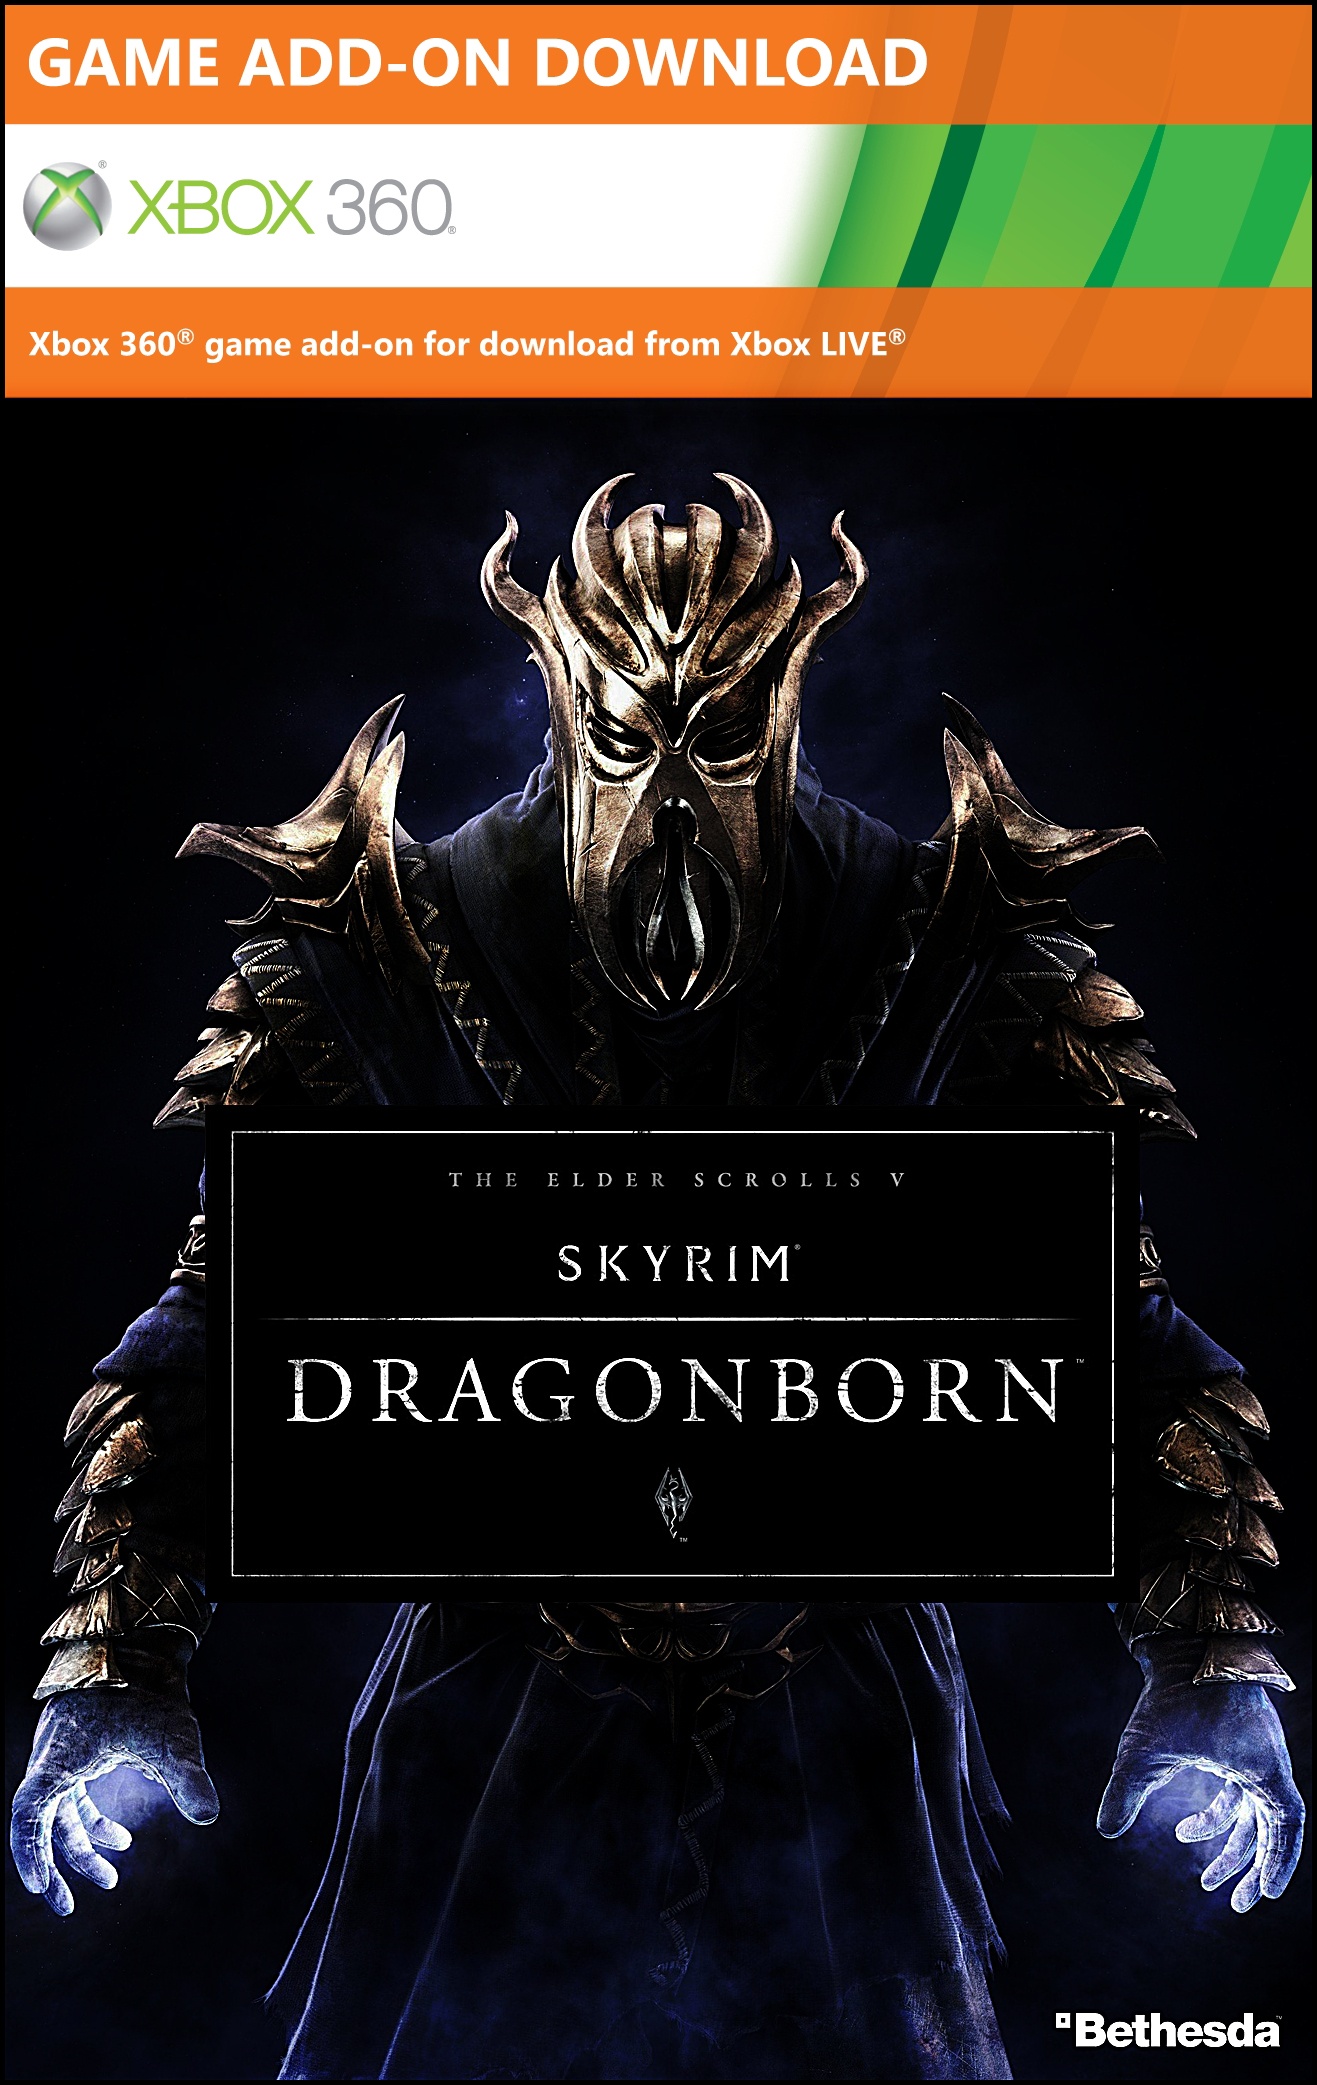 The Elder Scrolls V: Skyrim: Dragonborn box cover